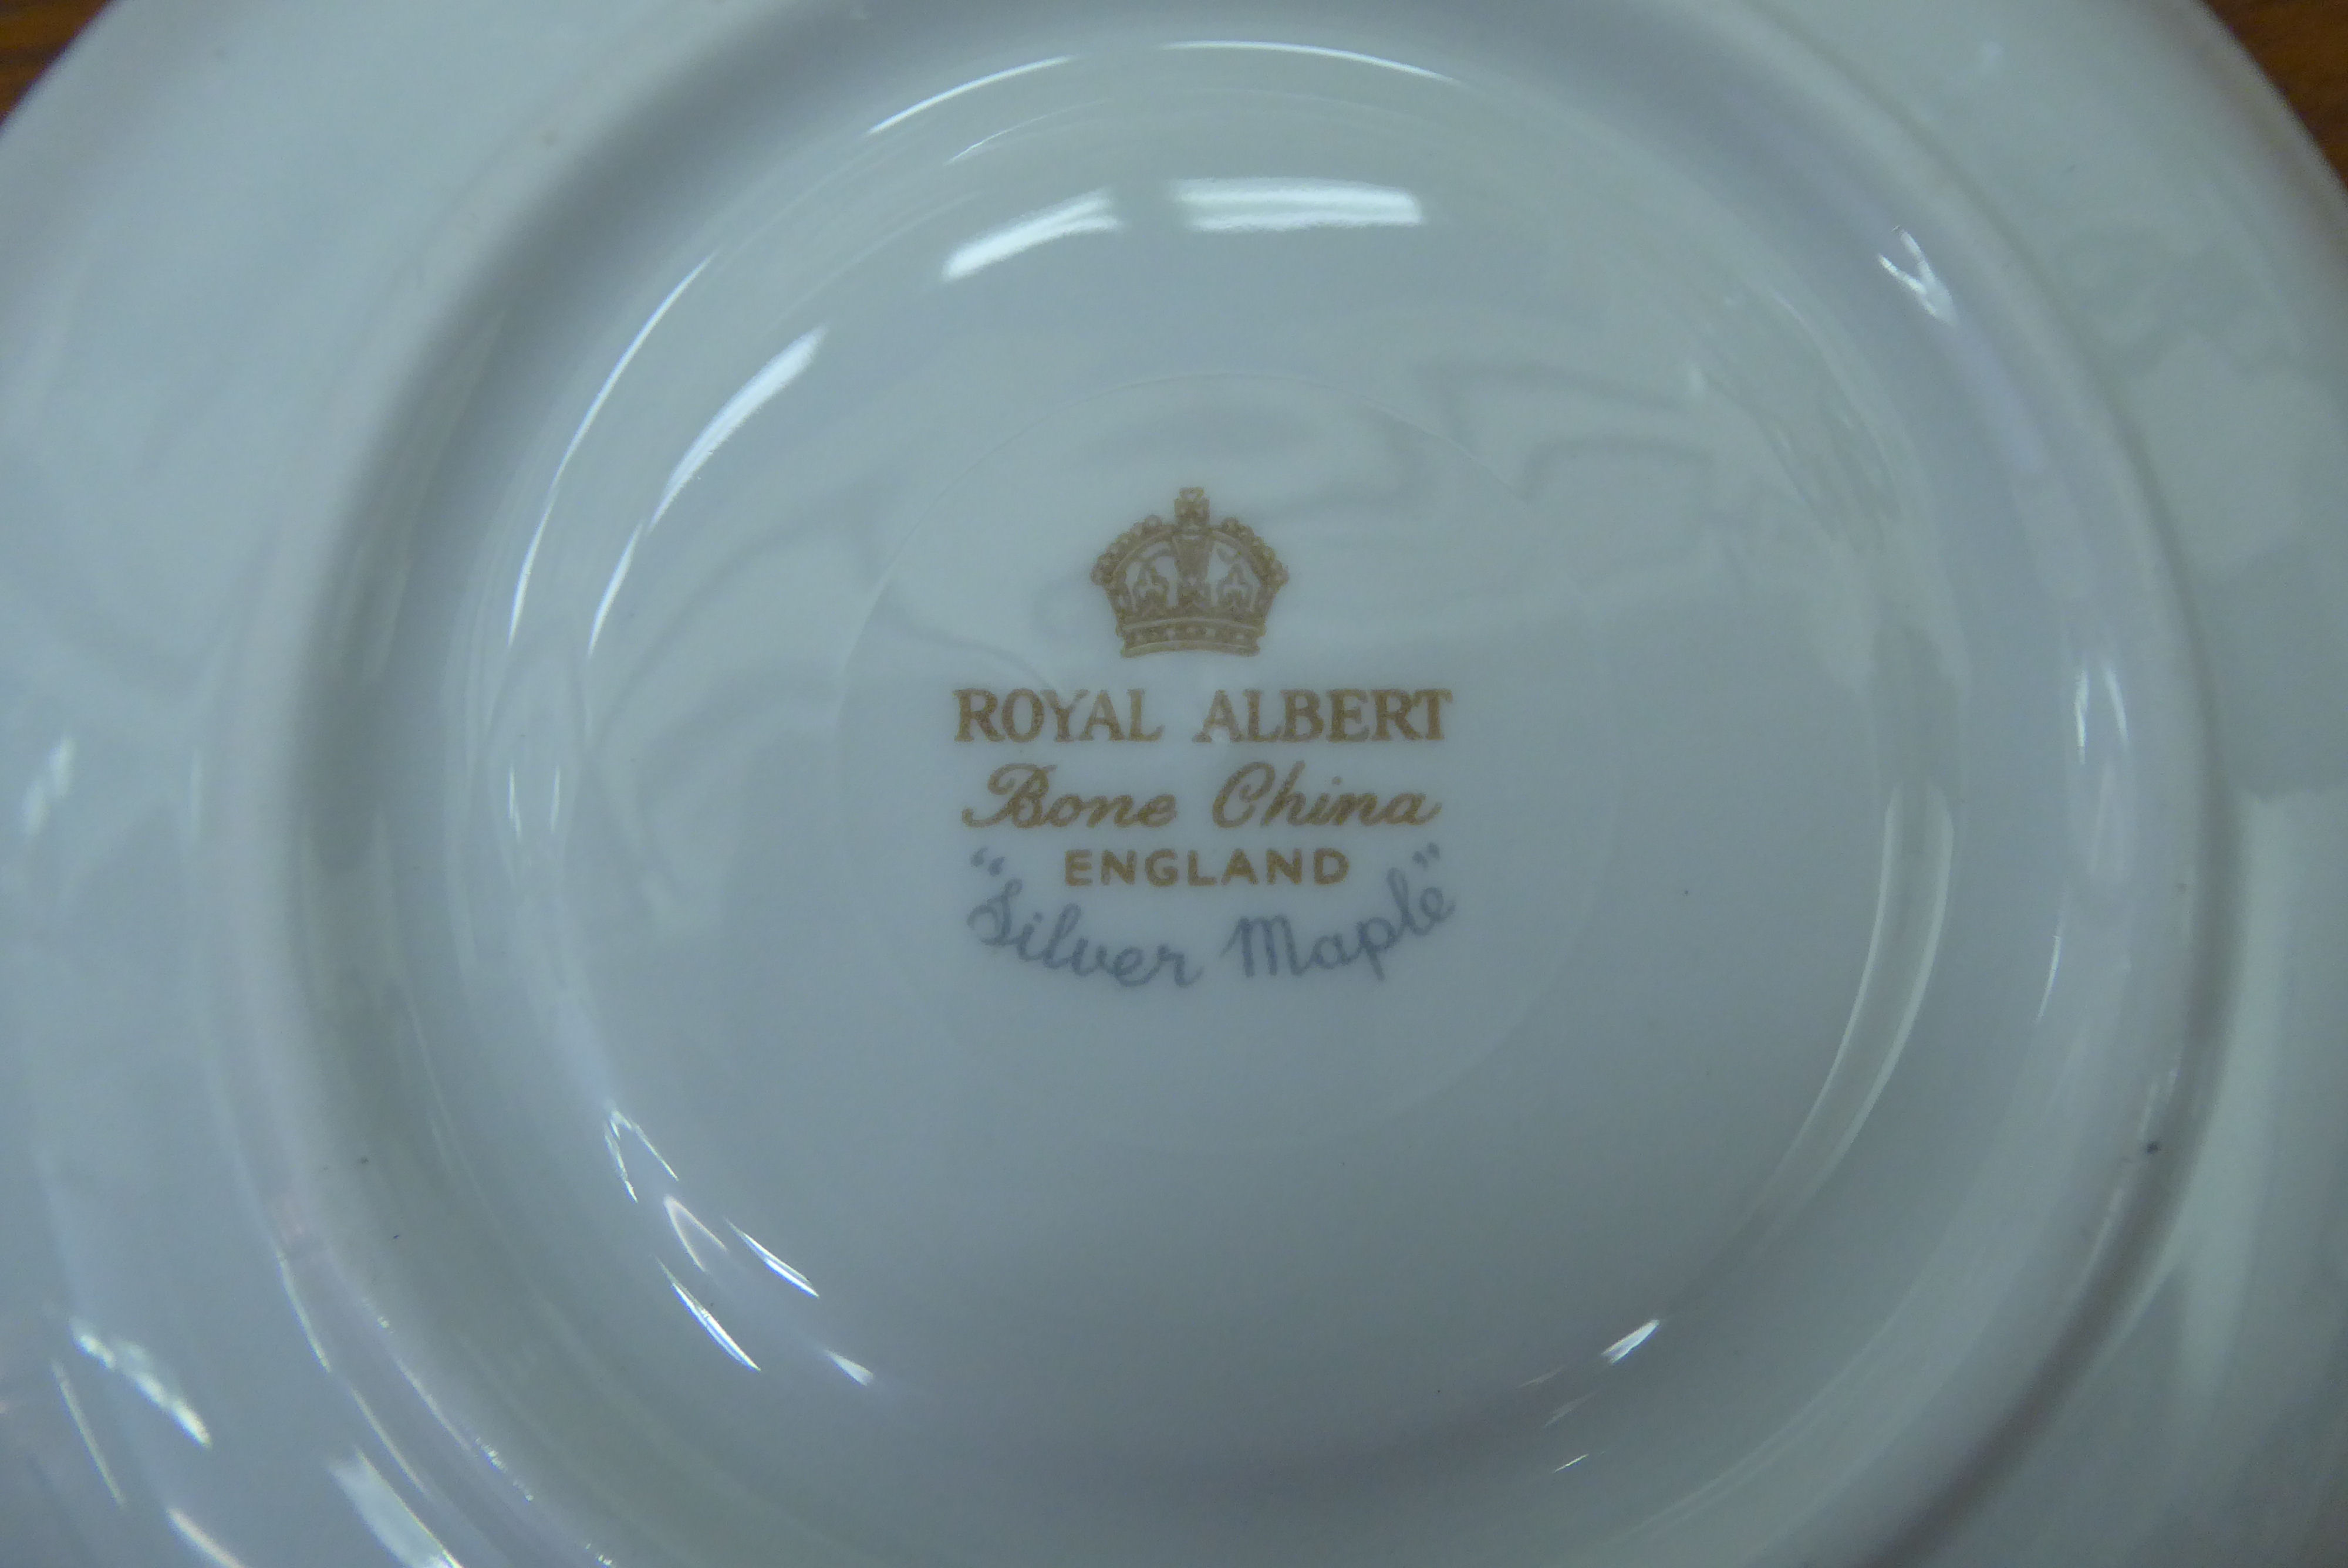 Royal Albert bone china Silver Maple pattern teaware - Image 5 of 5